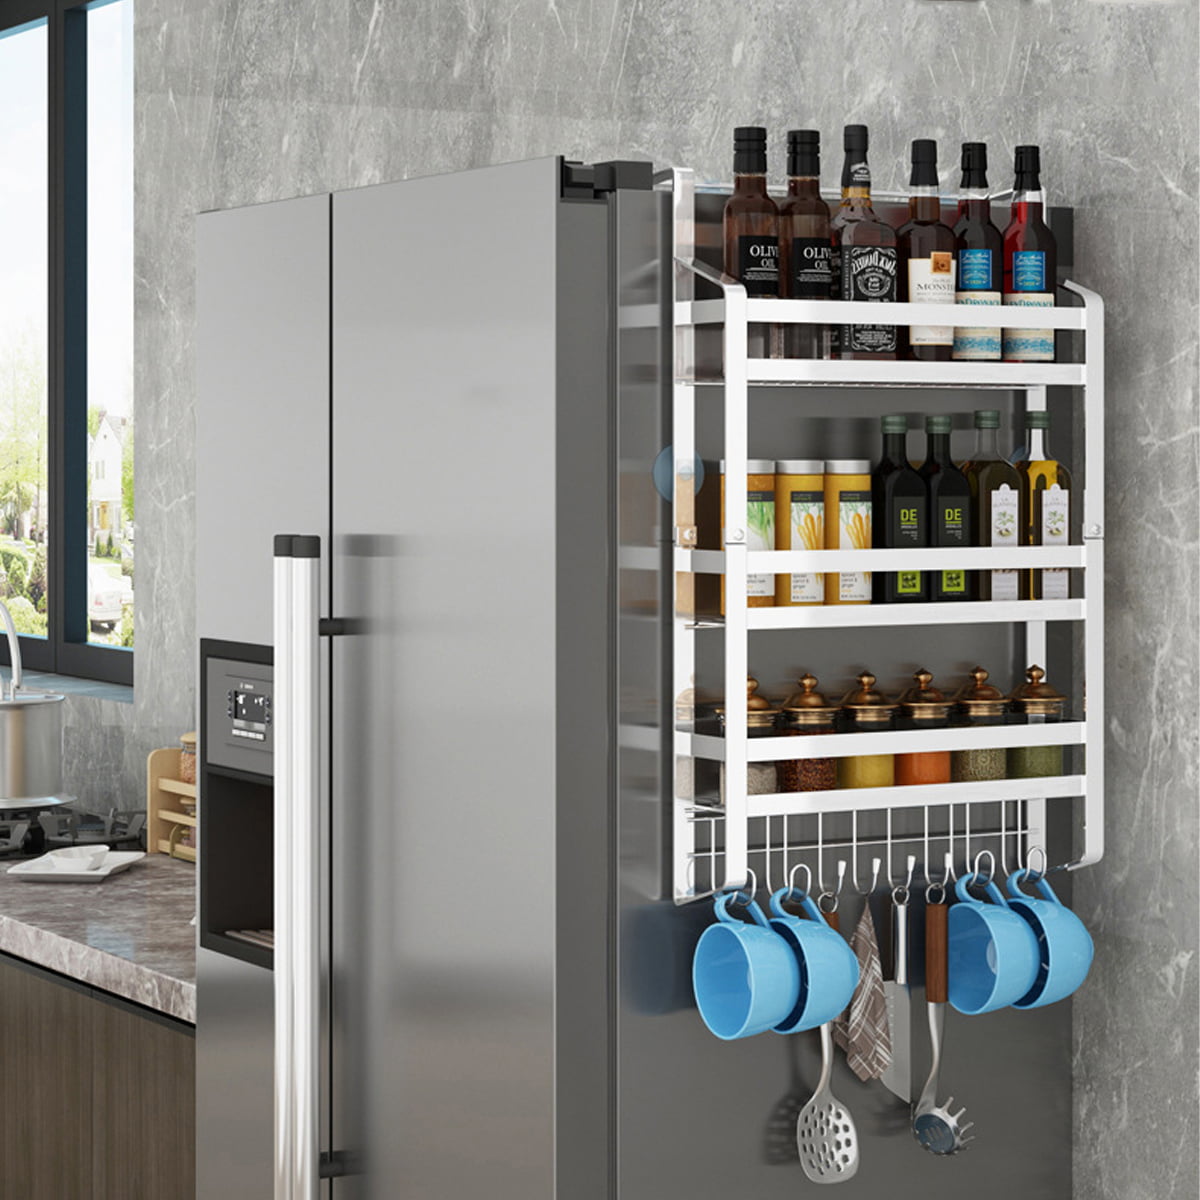 MAGNETIC HOOK SUPER STRONG HOLDS 8 LBS Magnet Kitchen Refrigerator Rack 